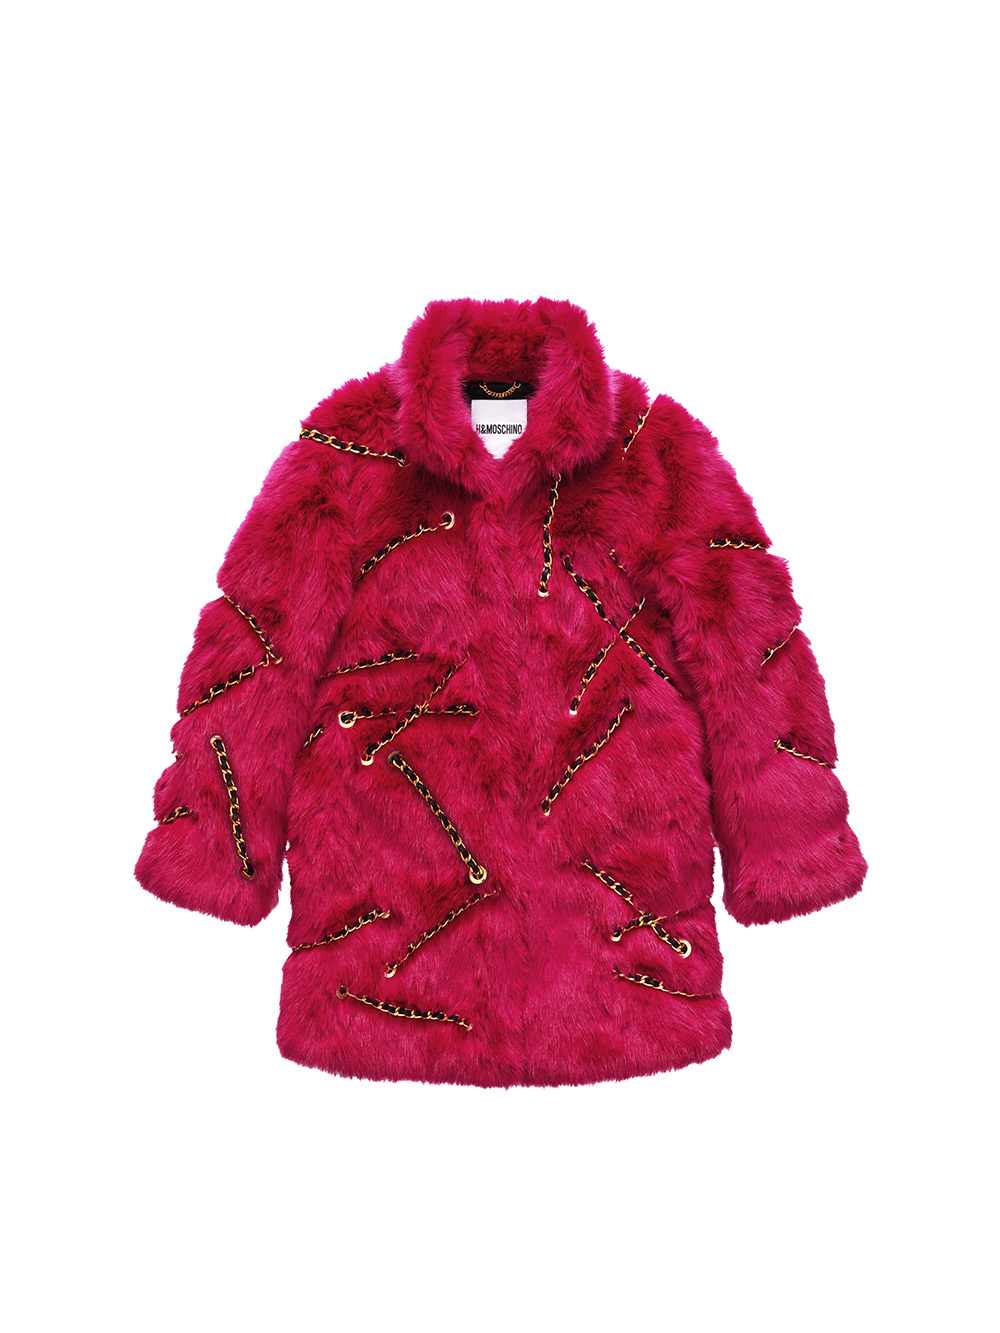 MOSCHINO [TV] H&M Faux Fur Chain Coat $299.00